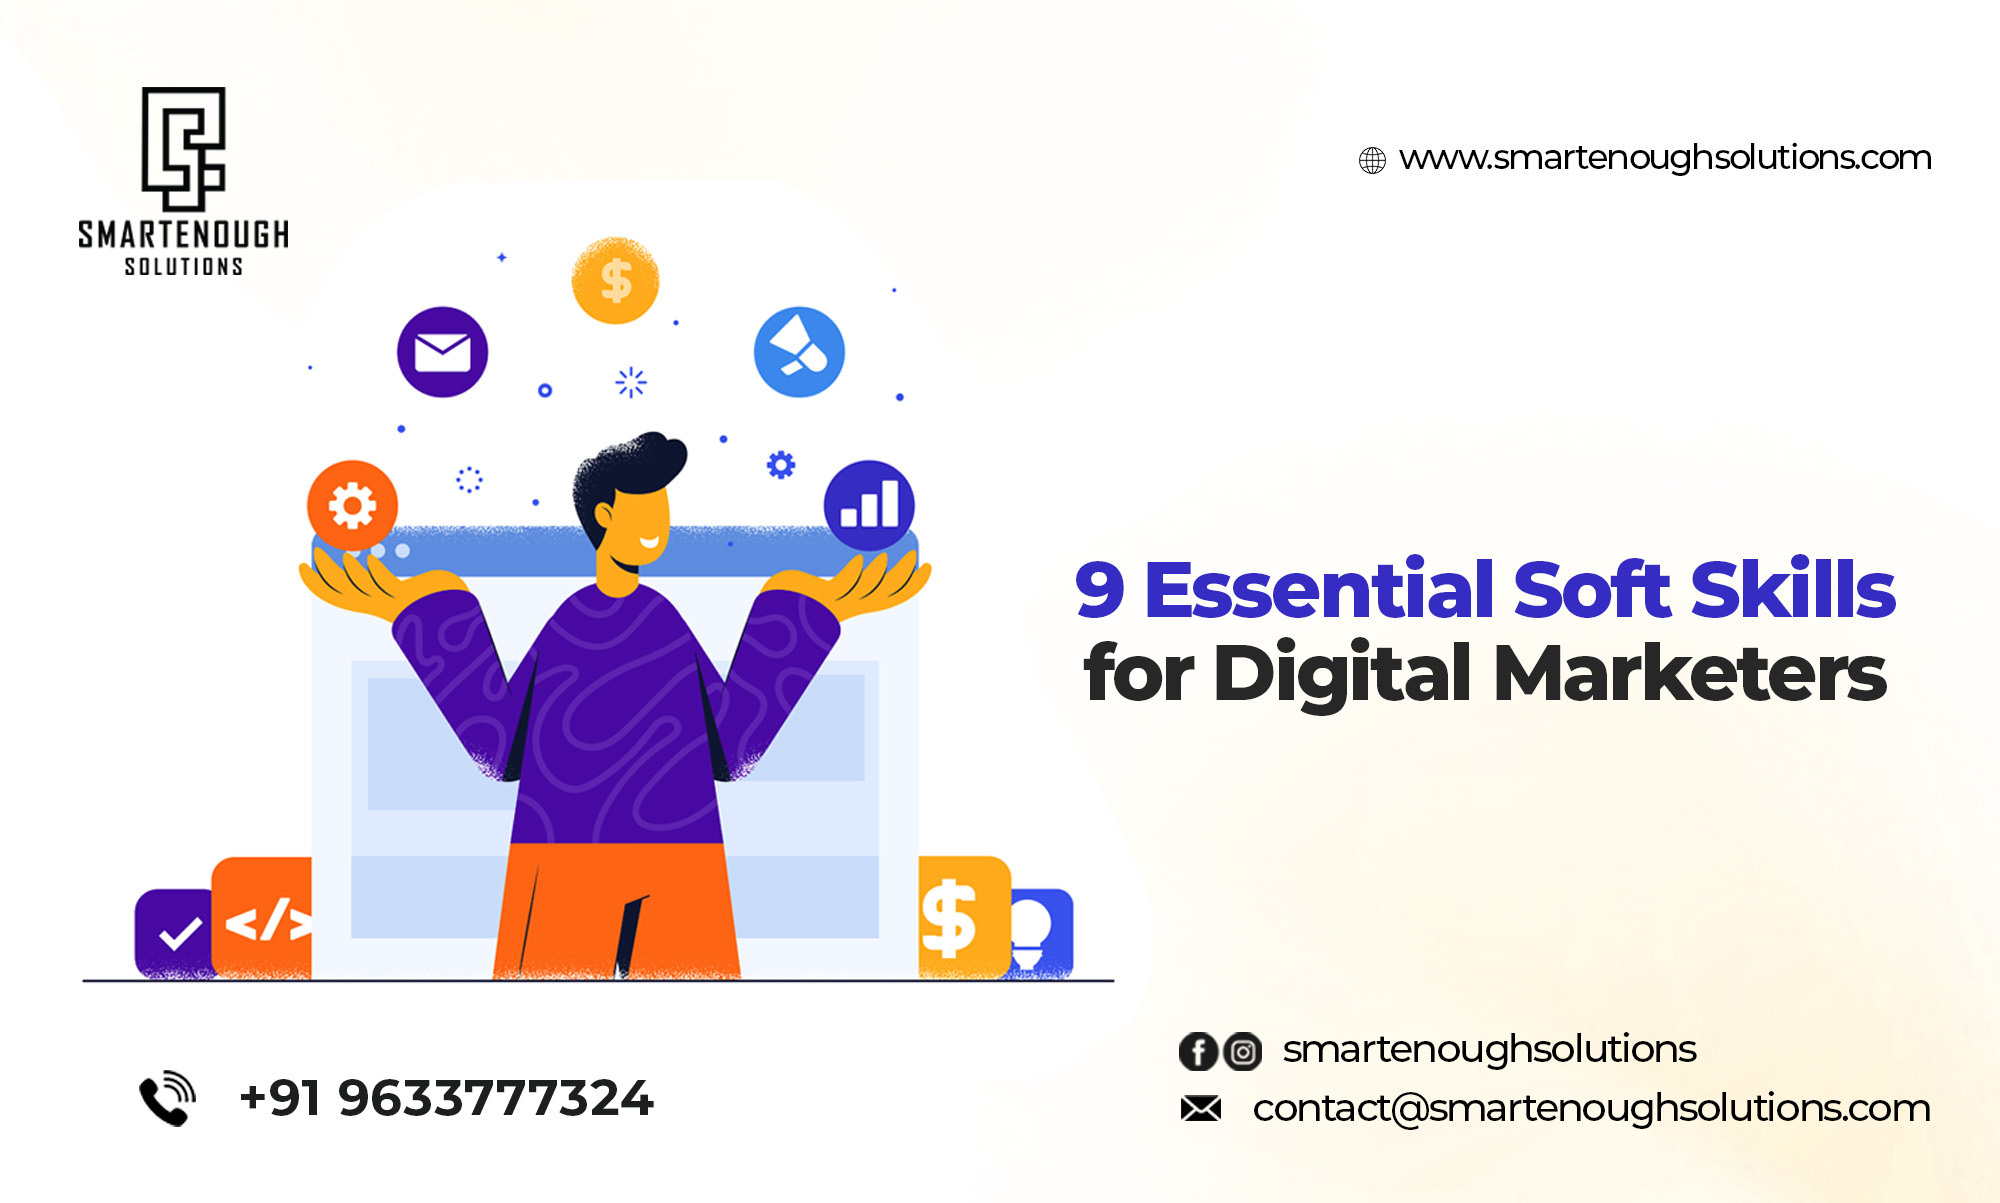 9 Essential Soft Skills for Digital Marketers